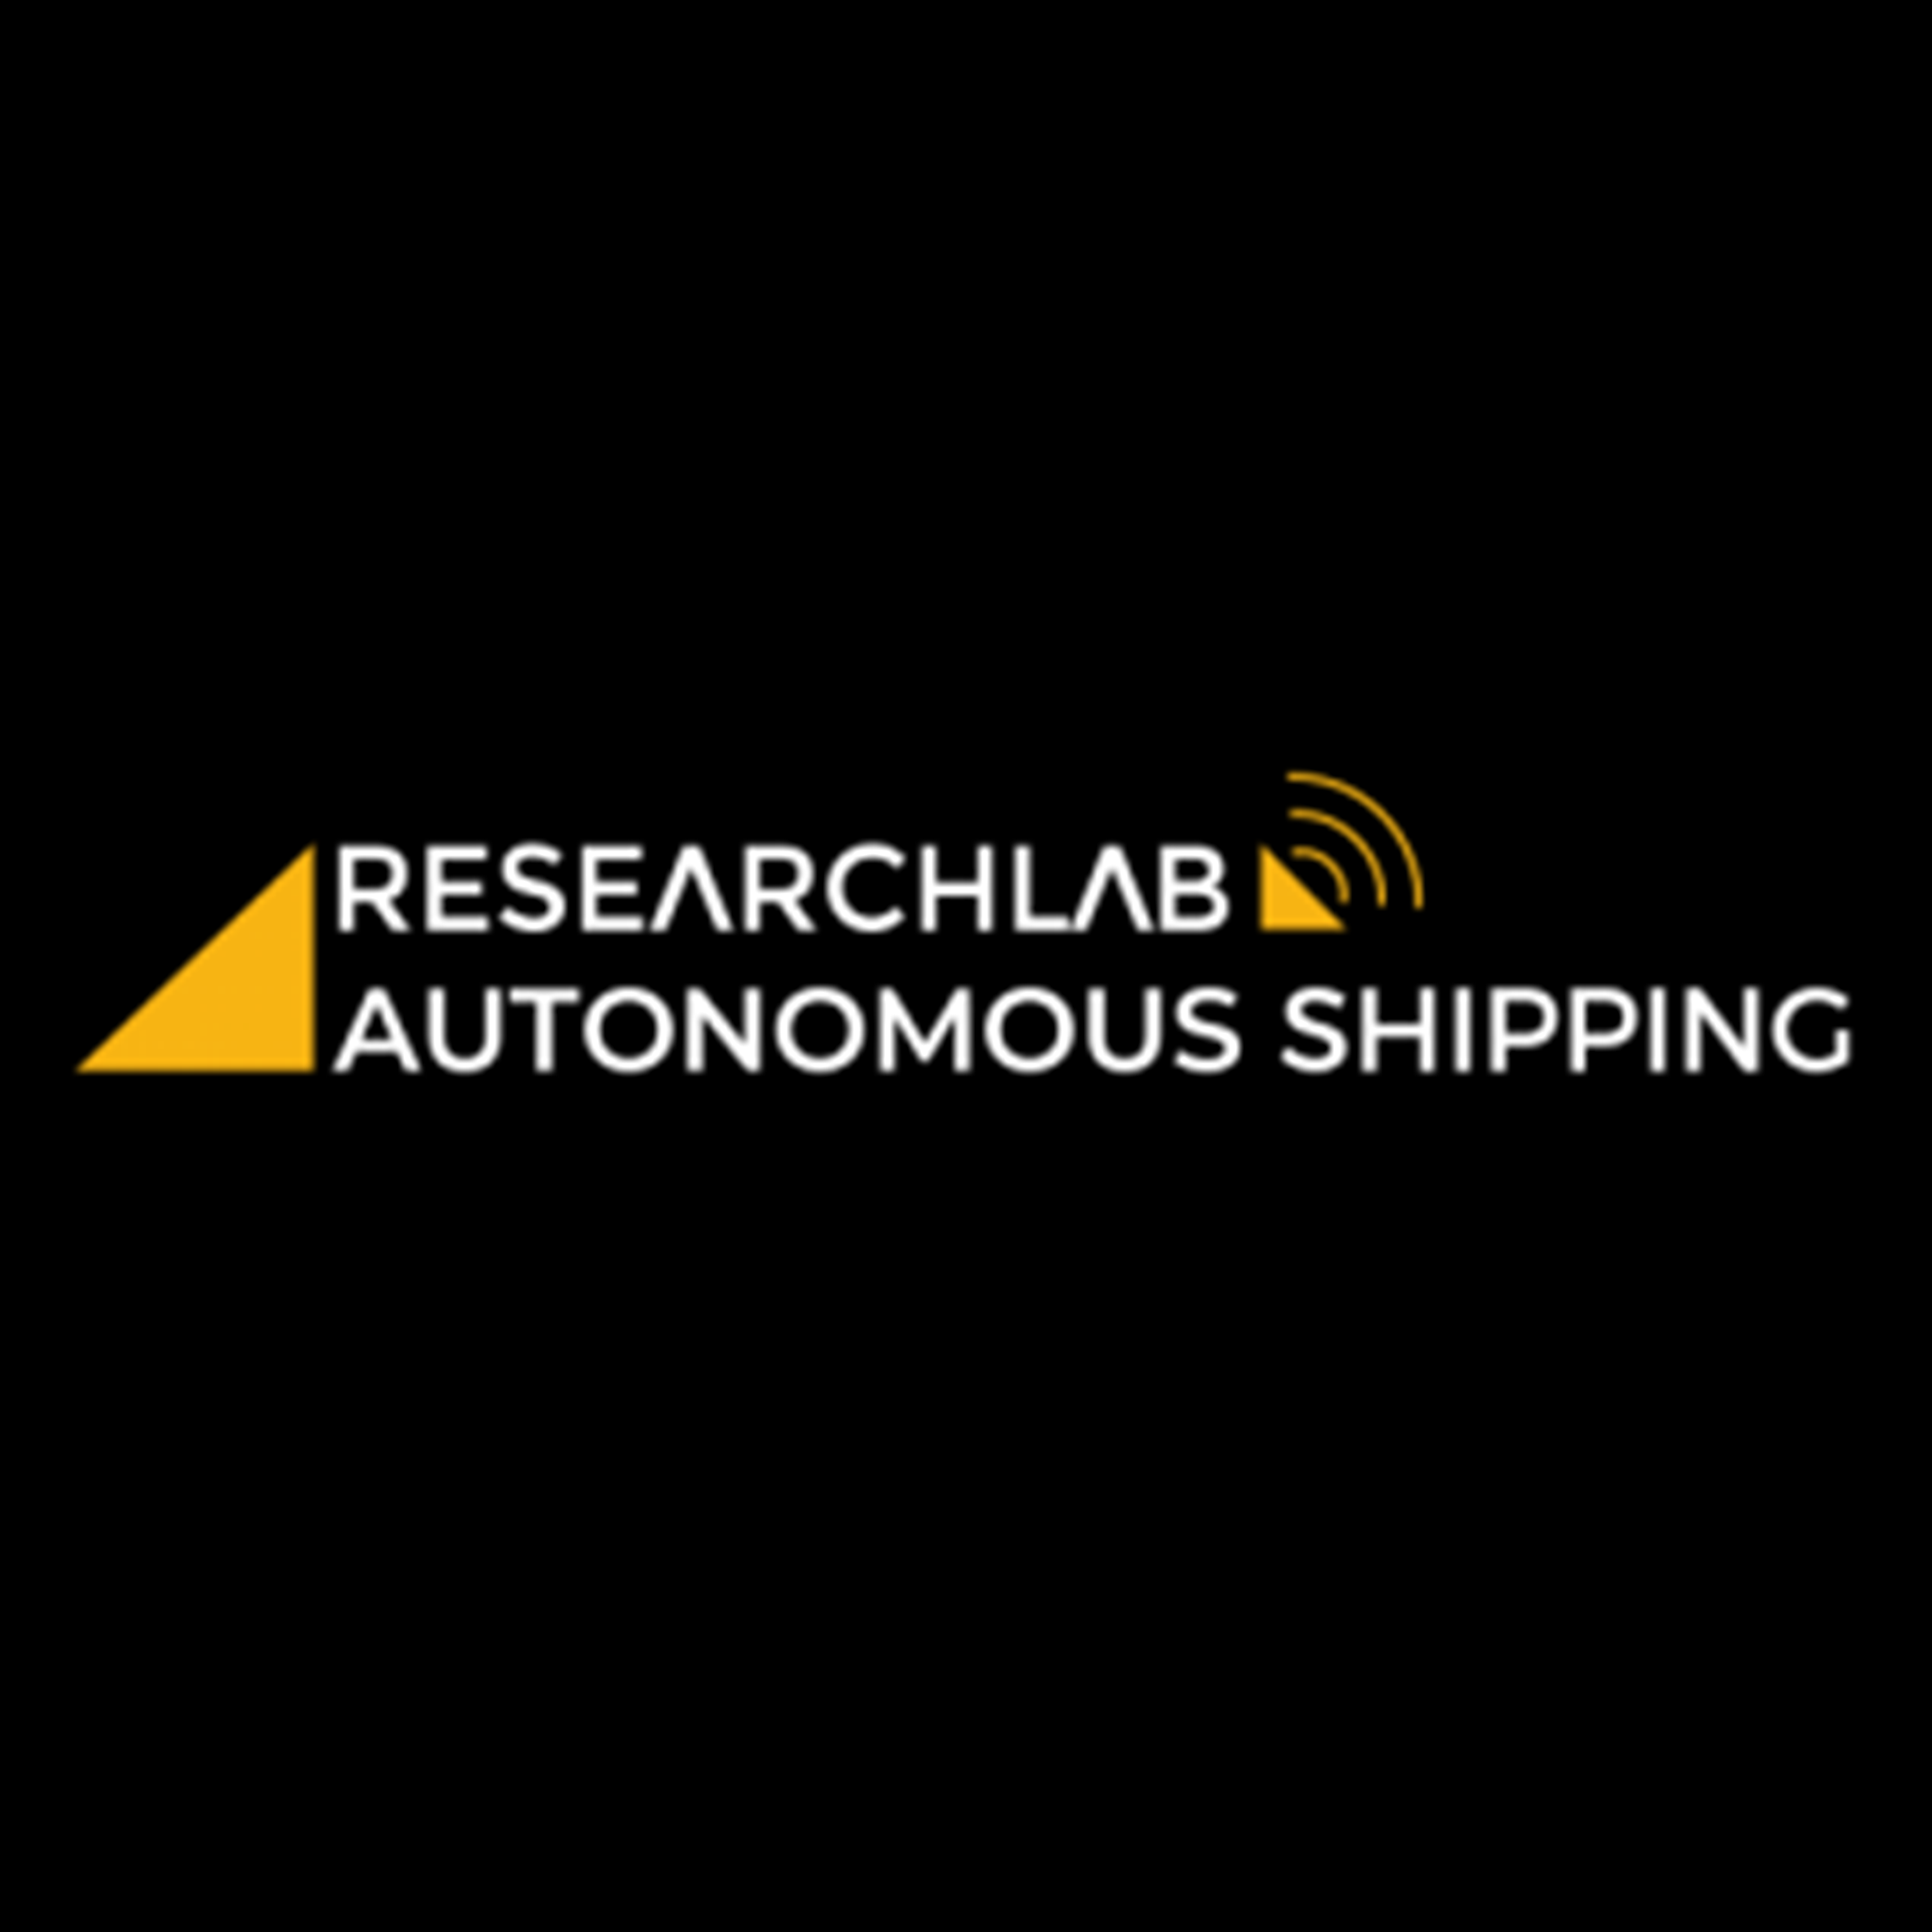 Researchlab Autonomous Shipping